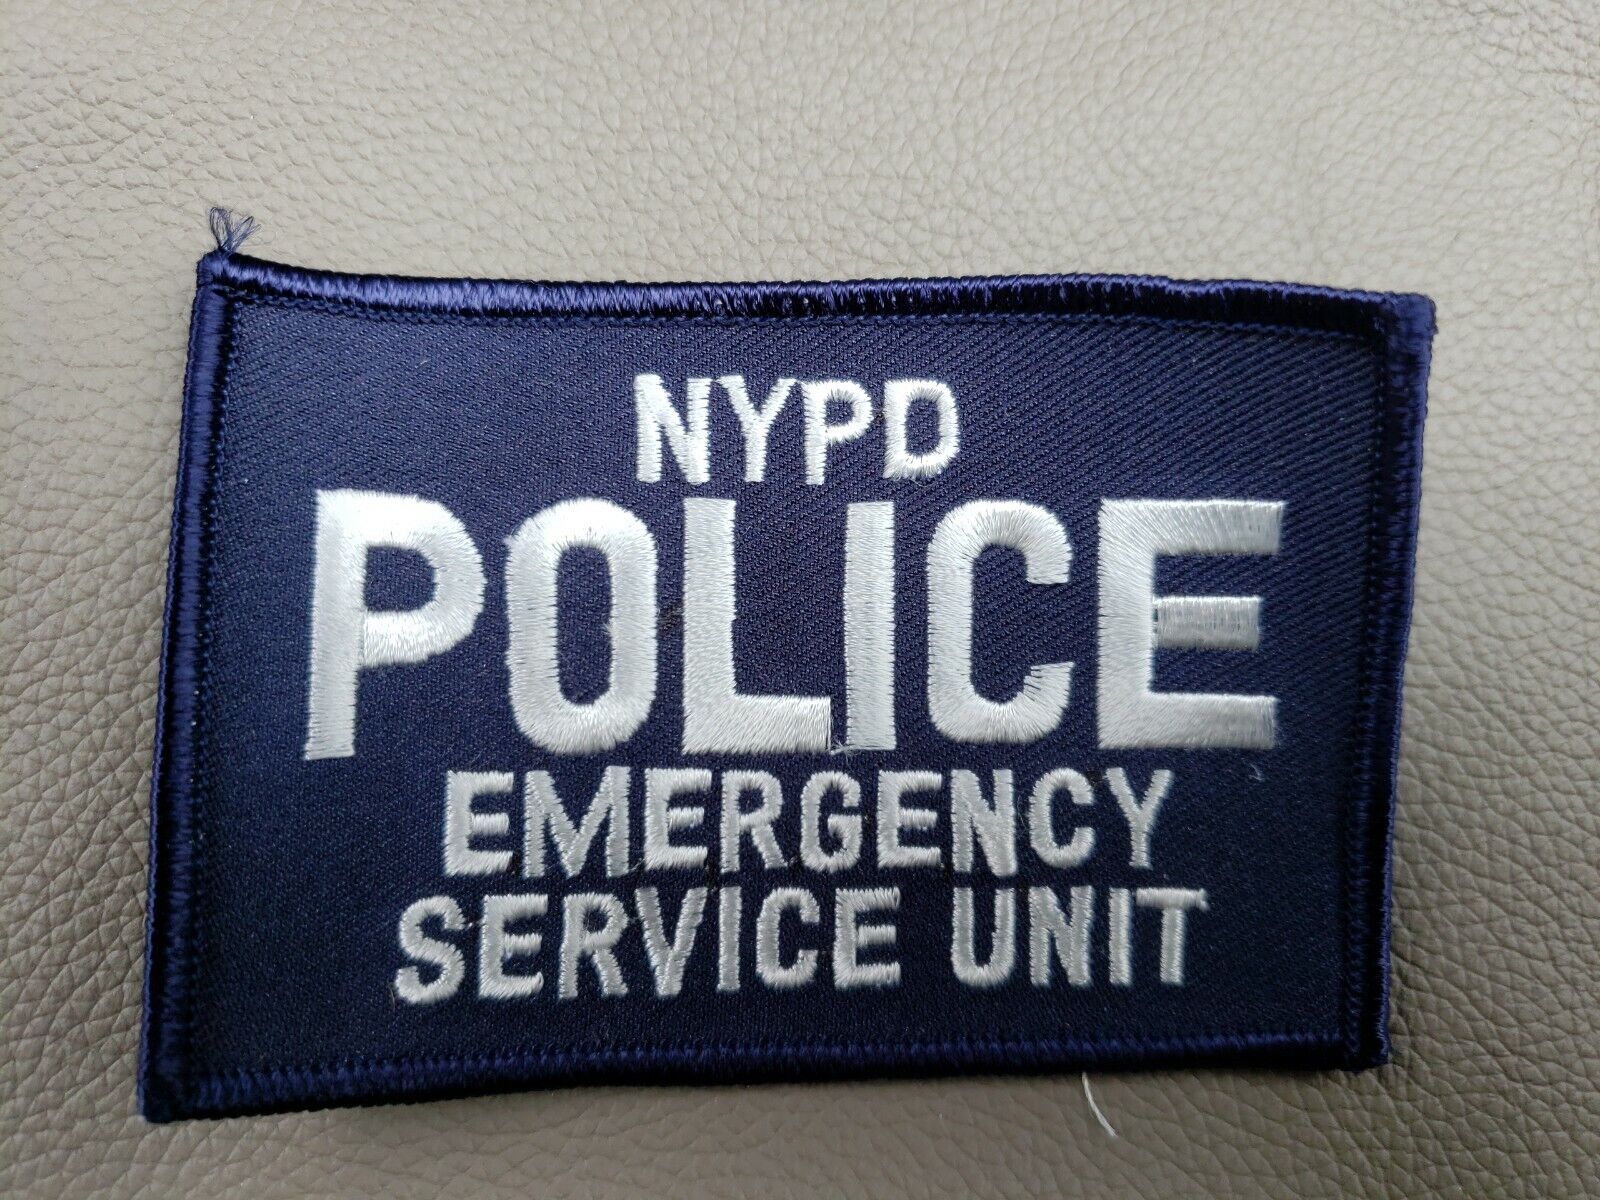 NYPD EMERGENCY SERVICE UNIT NEW YORK CITY POLICE PATCH ERT SERT SWAT K9 BOMB NY